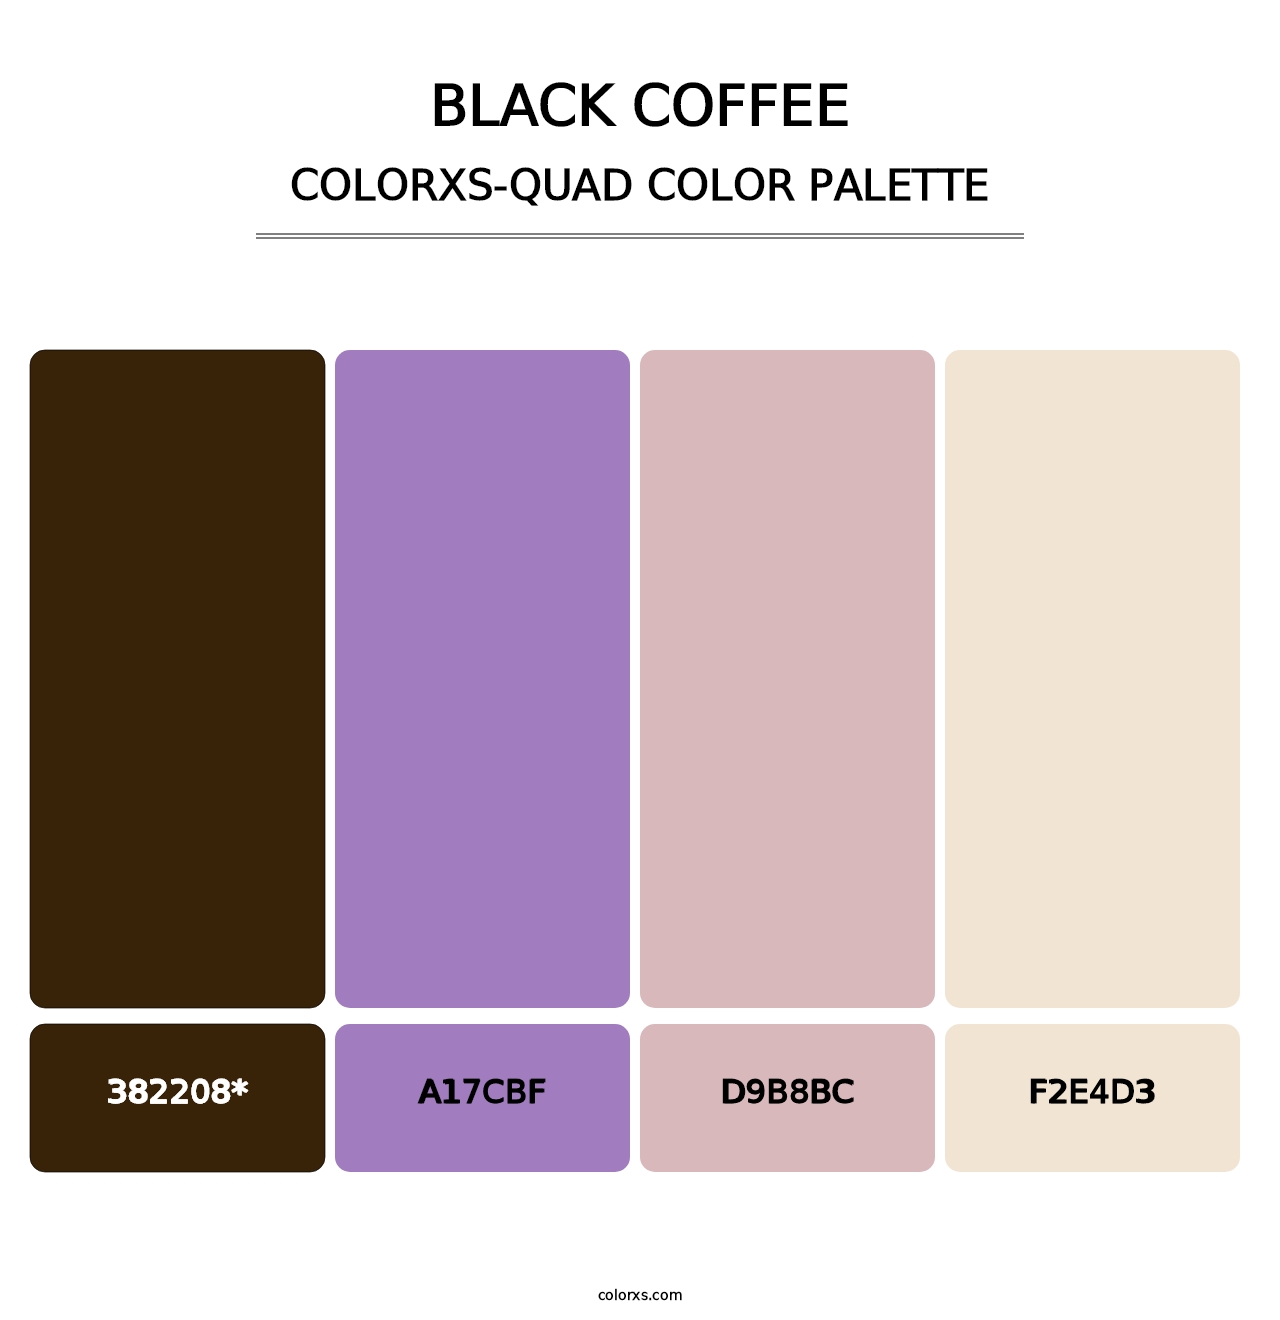 Black Coffee - Colorxs Quad Palette